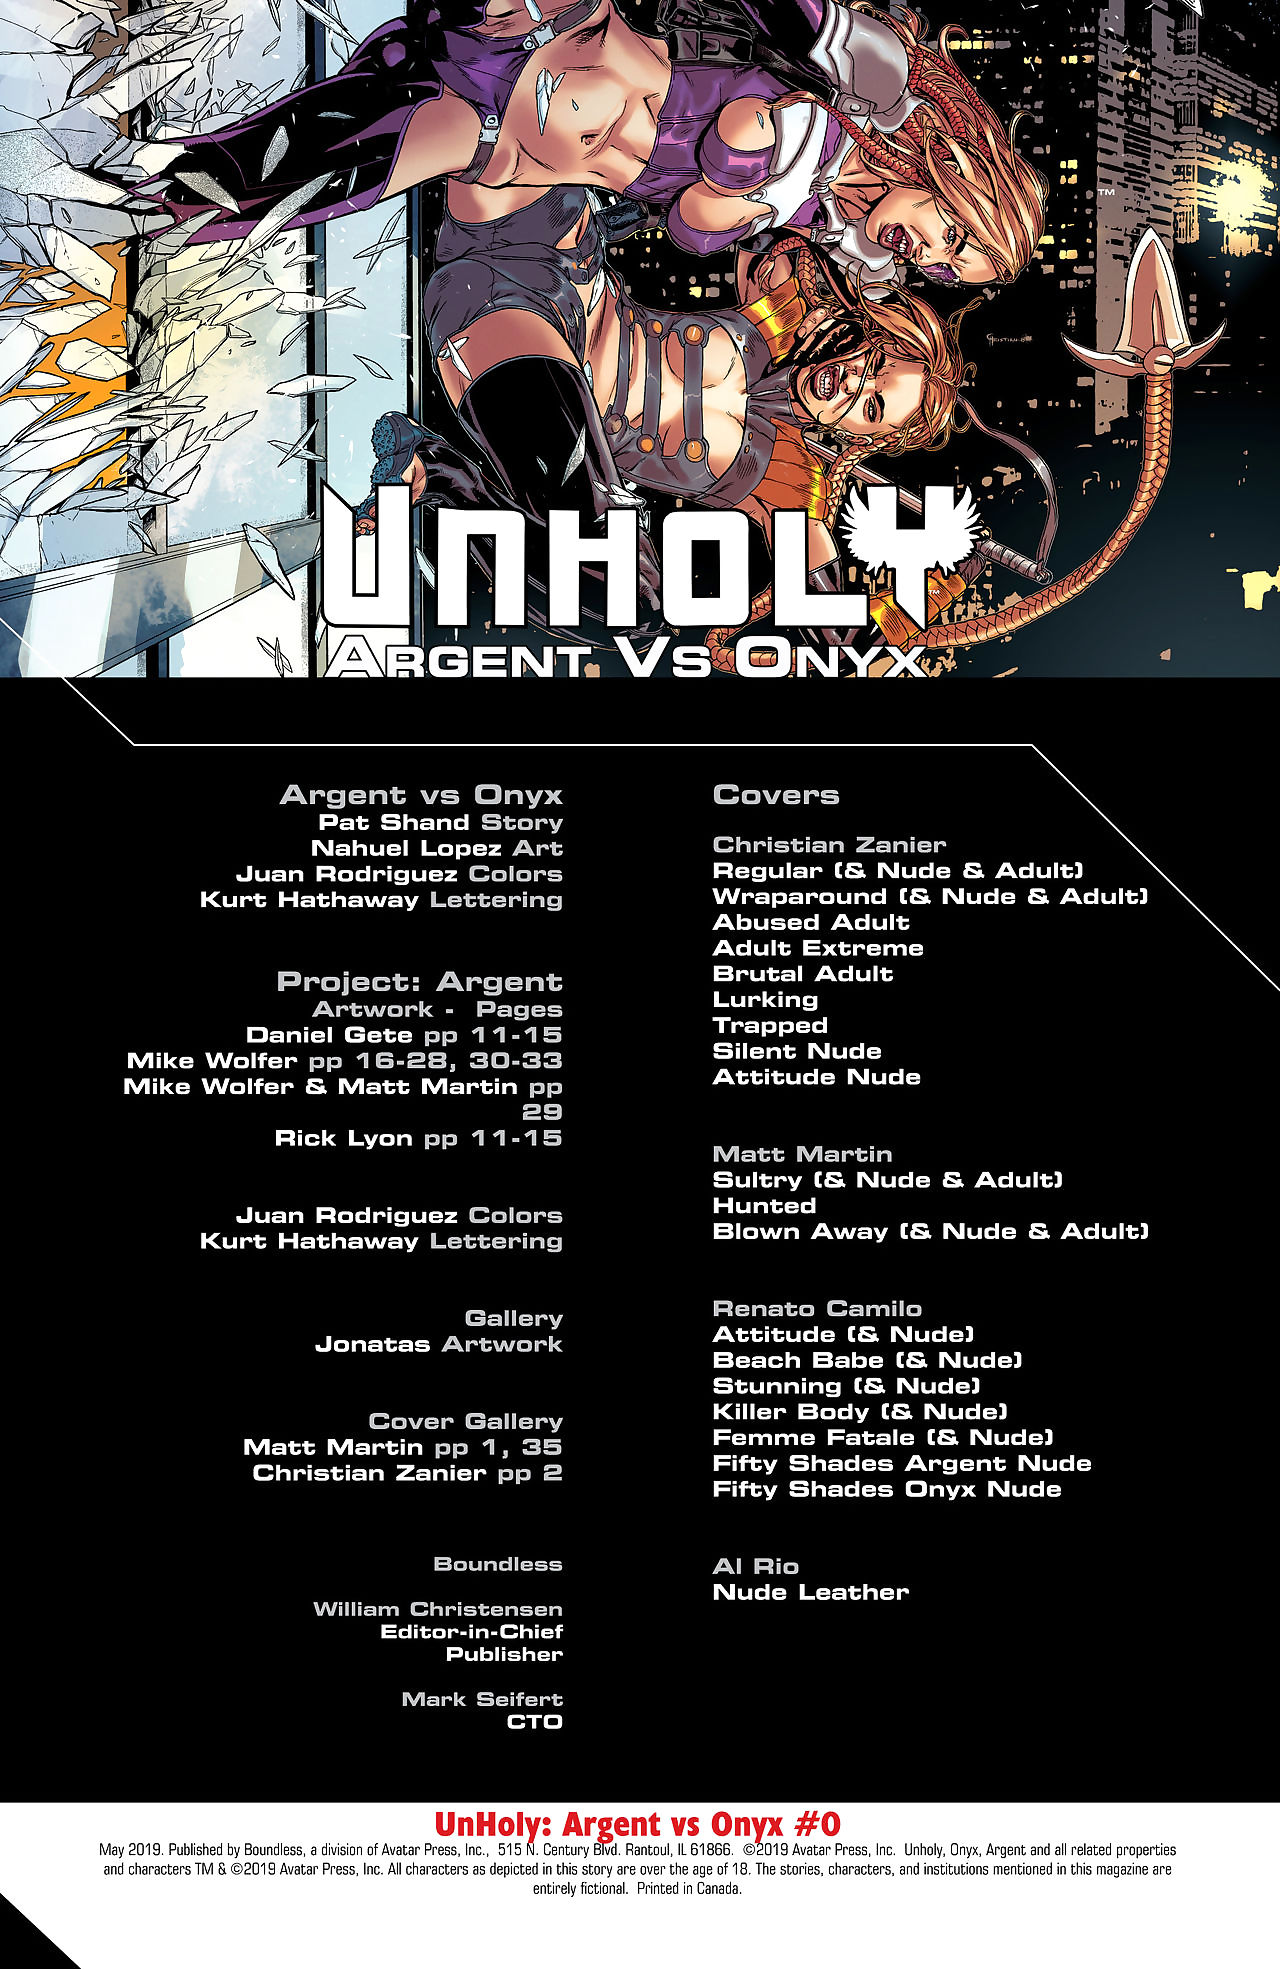 unholy: argent vs onyx #0